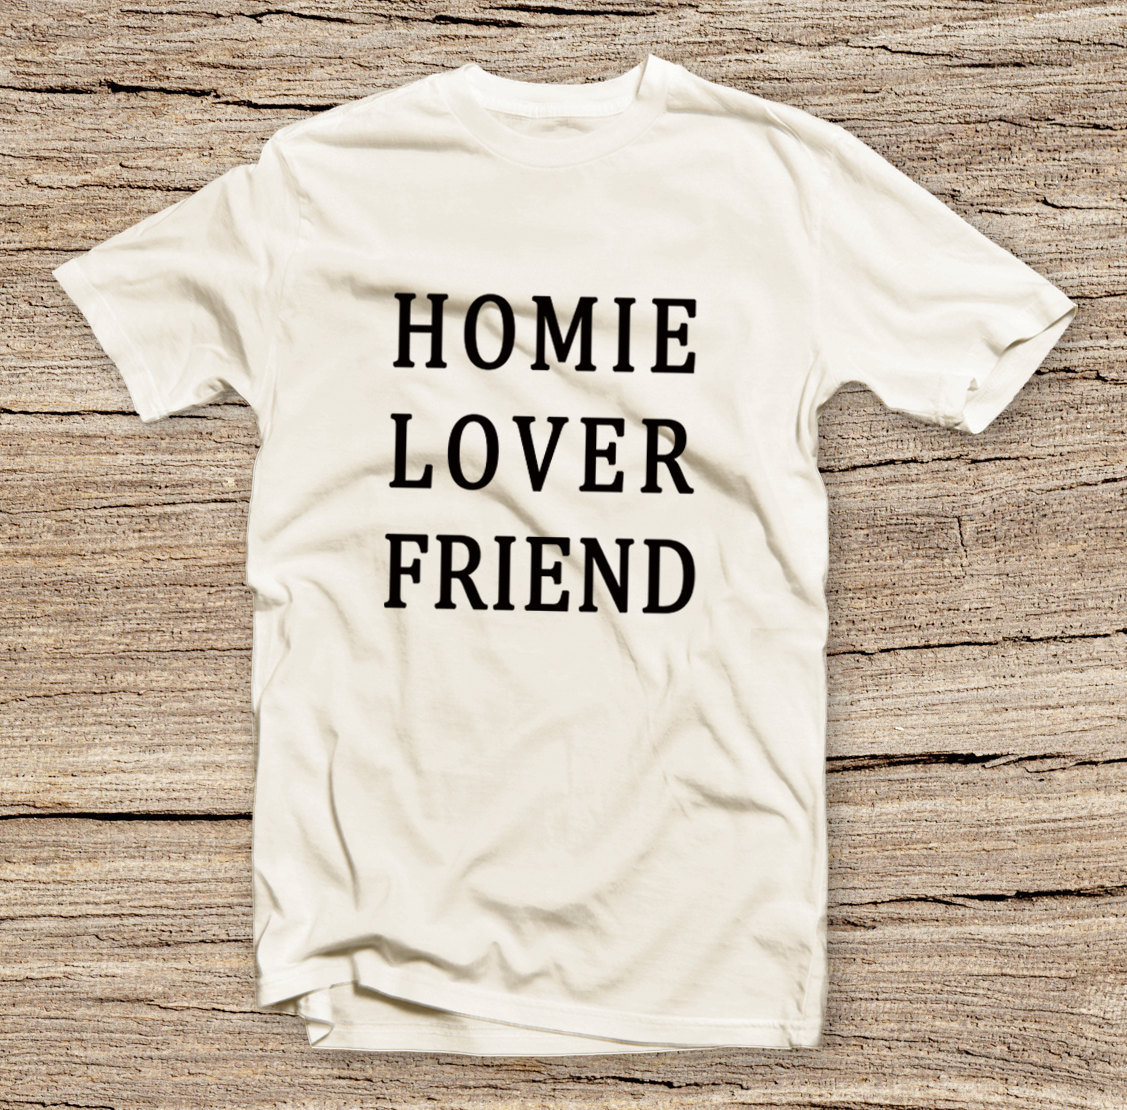 Pts-082 Homie Lover Friend Tee, Mens Womans T-shirt, Couple T-shirt, Fashion Style Printed T-shirt